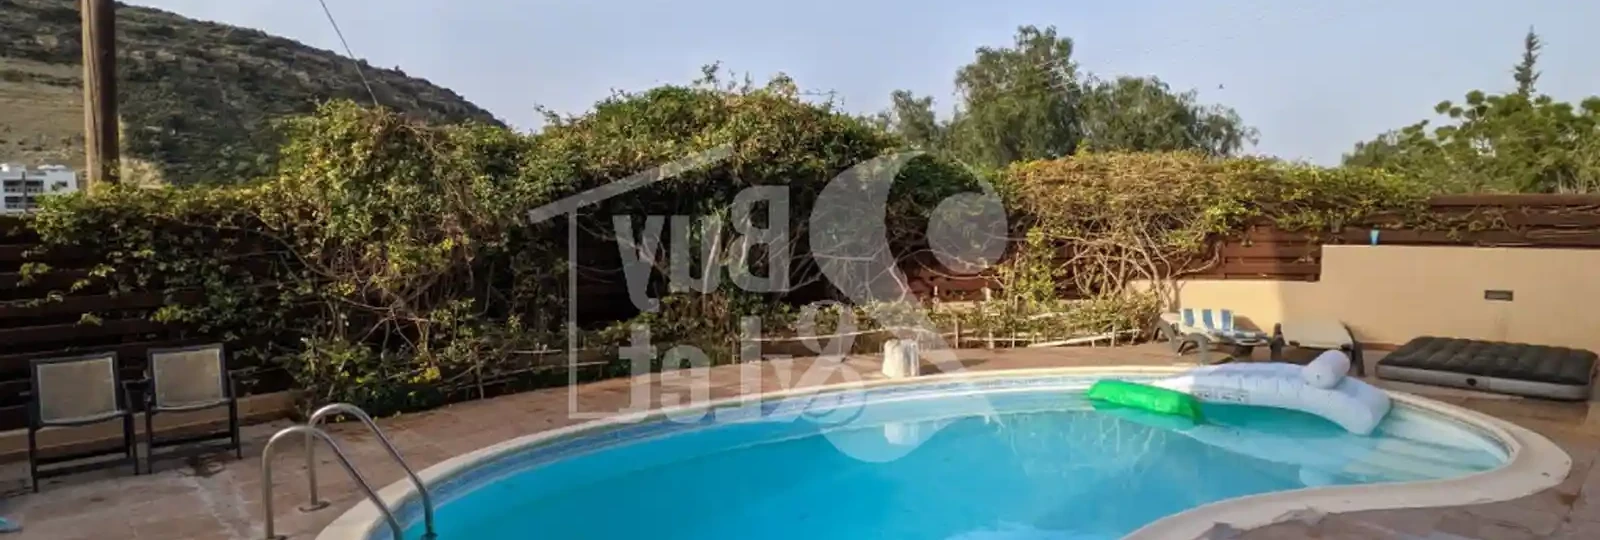 4-bedroom villa fоr sаle €1.000.000, image 1